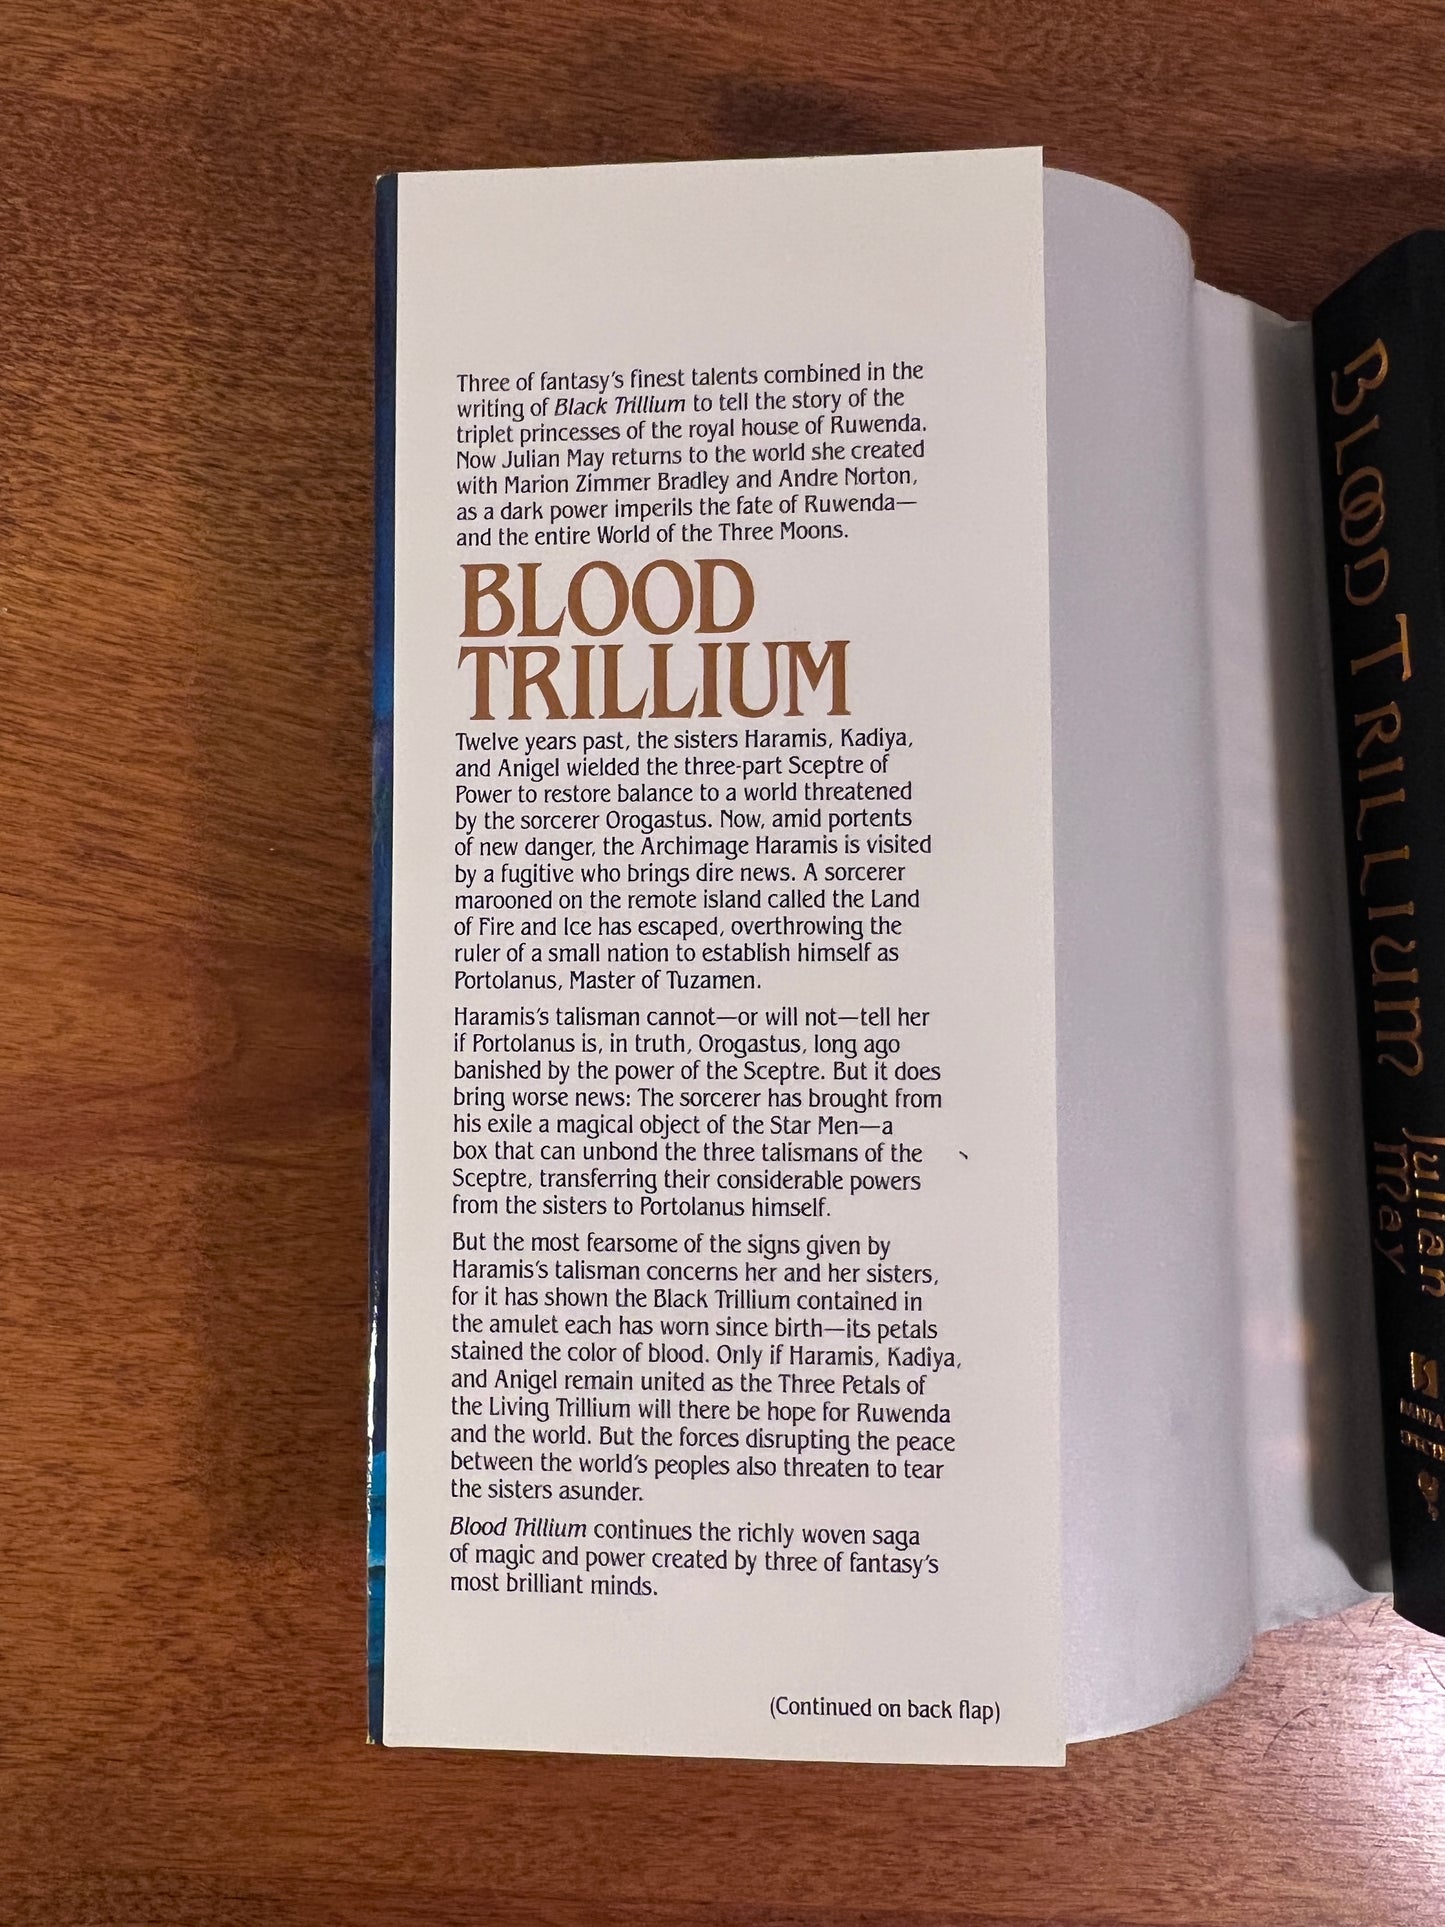 Blood Trillium by Julian May